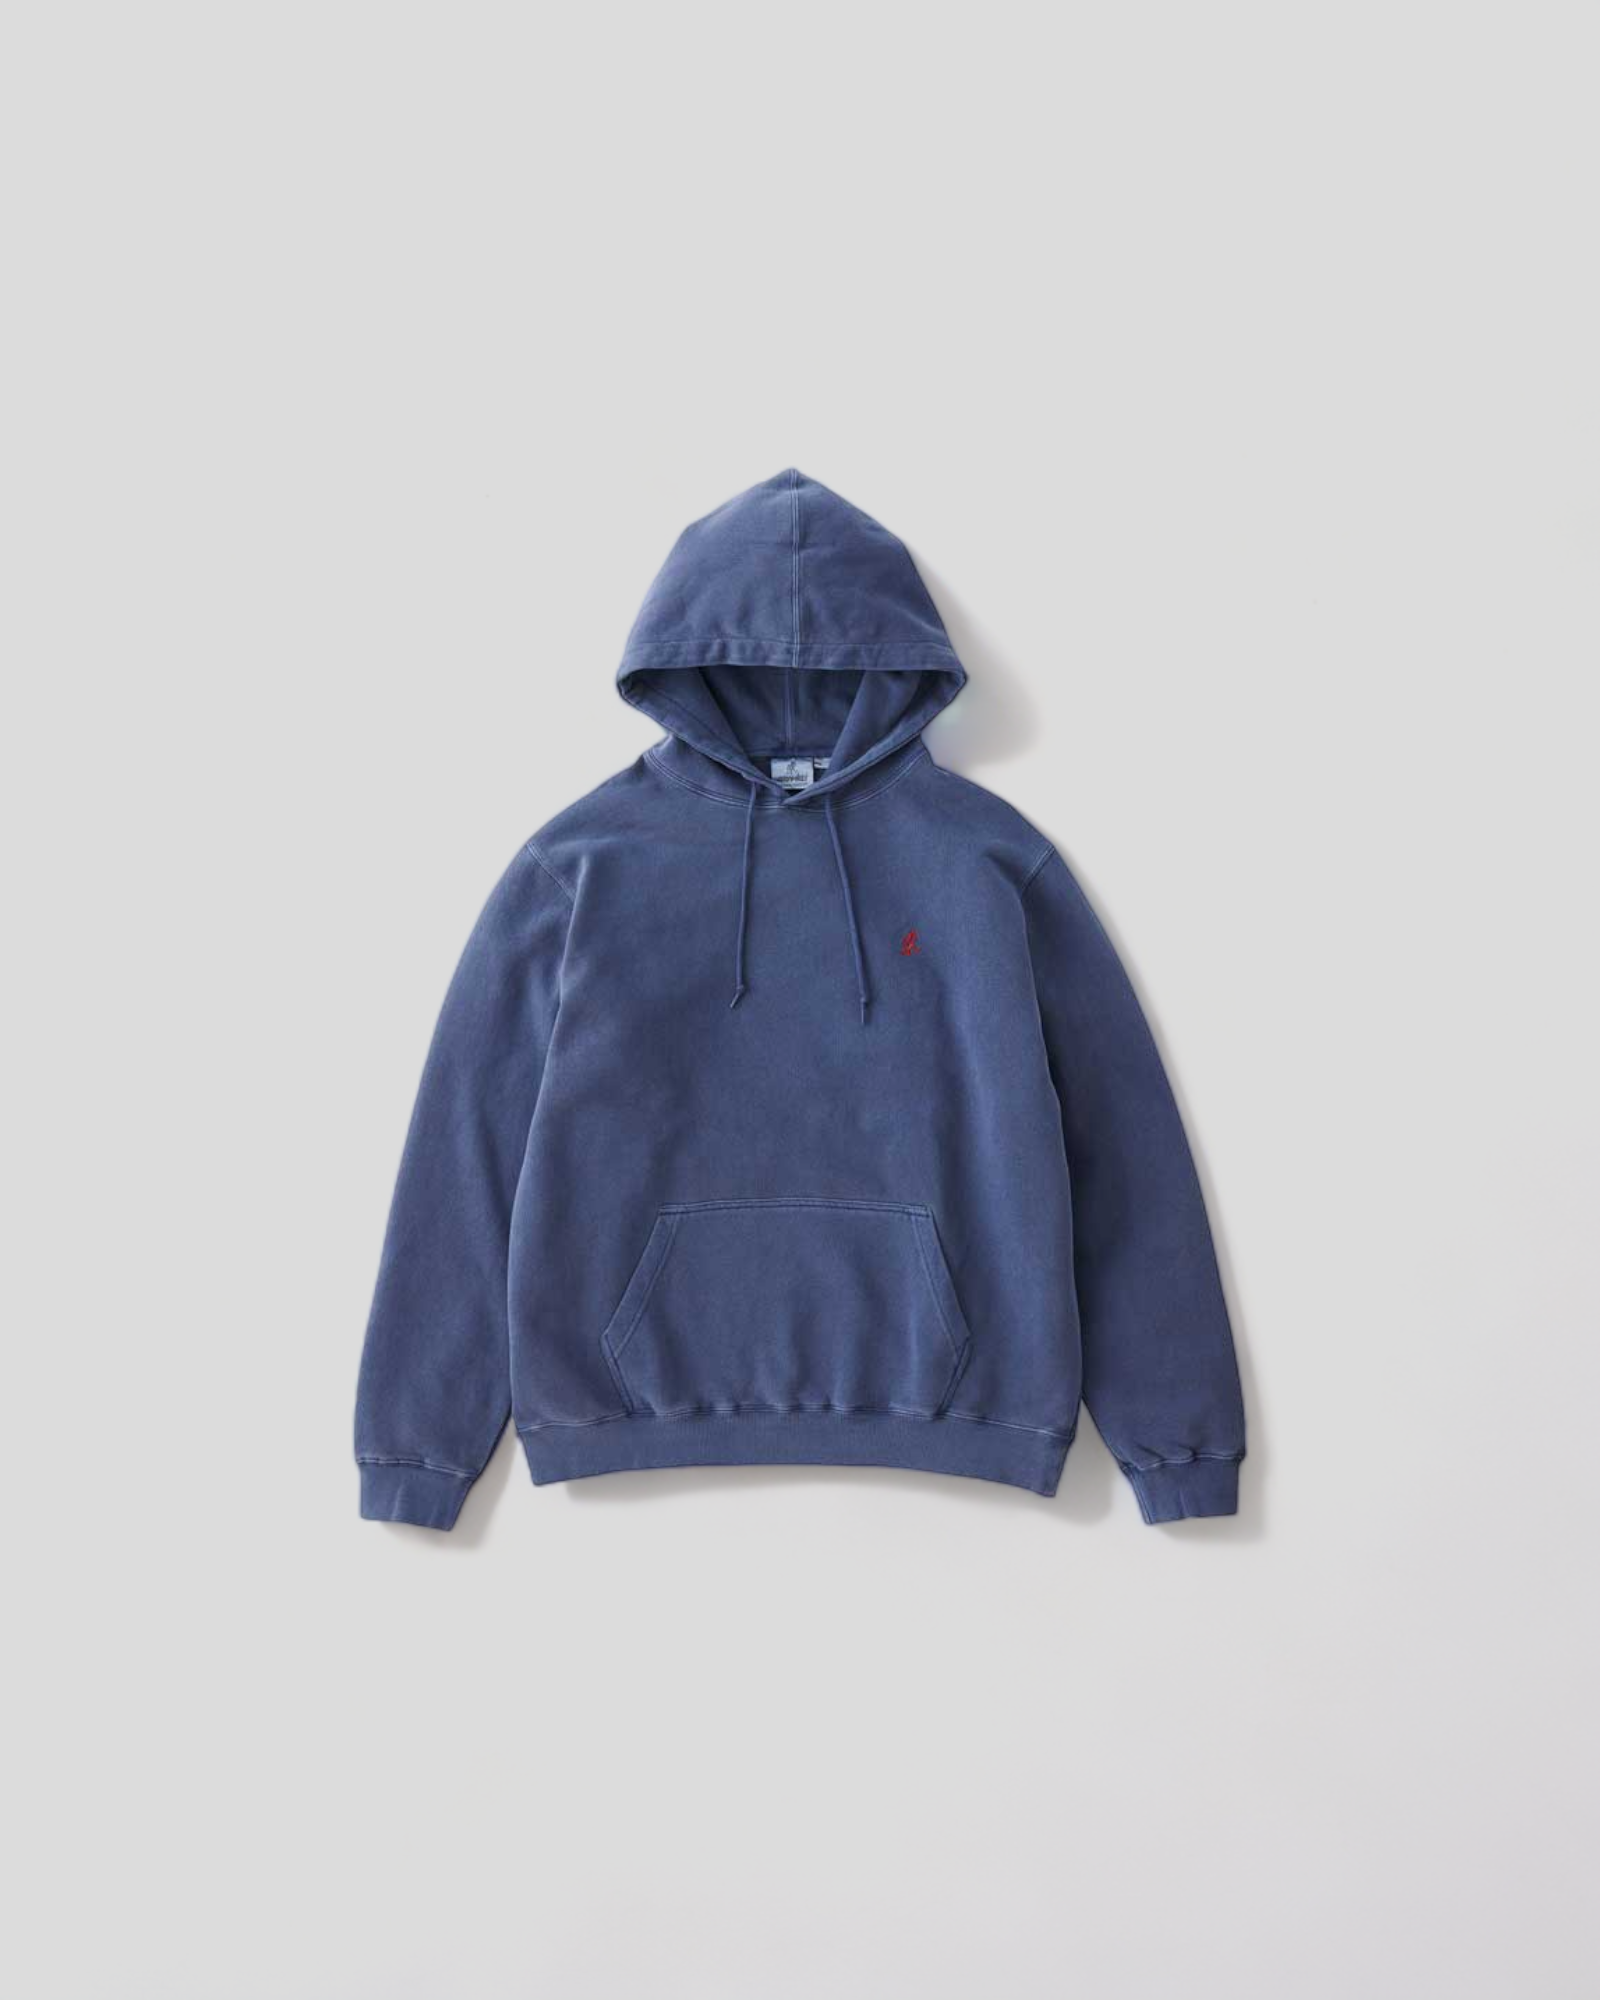 Gramicci || One Point Hooded Sweatshirt || Navy Pigment